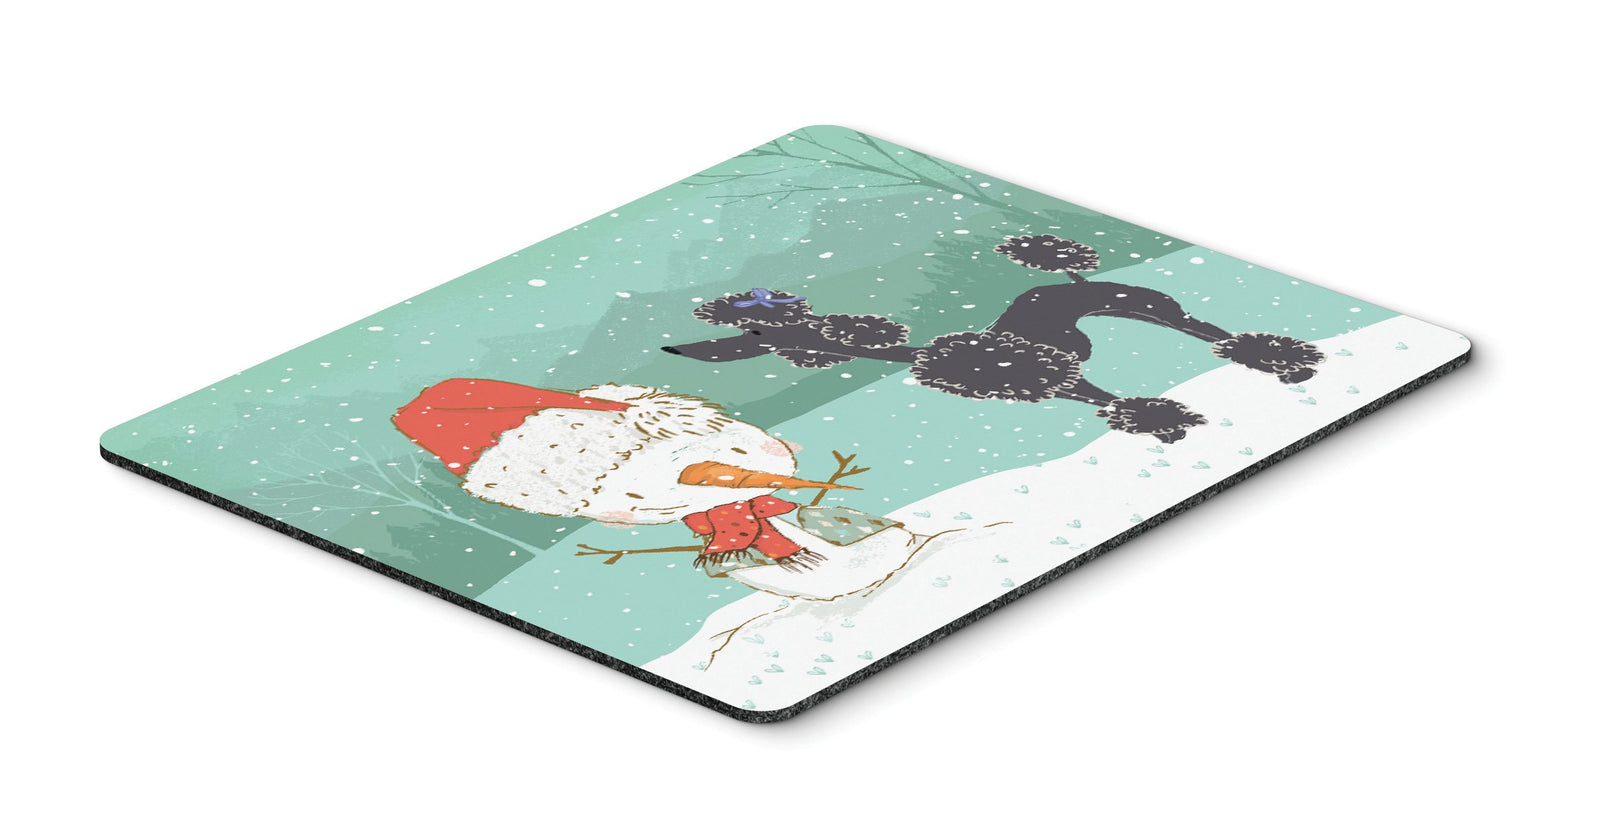 Black Poodle Snowman Christmas Mouse Pad, Hot Pad or Trivet CK2064MP by Caroline's Treasures